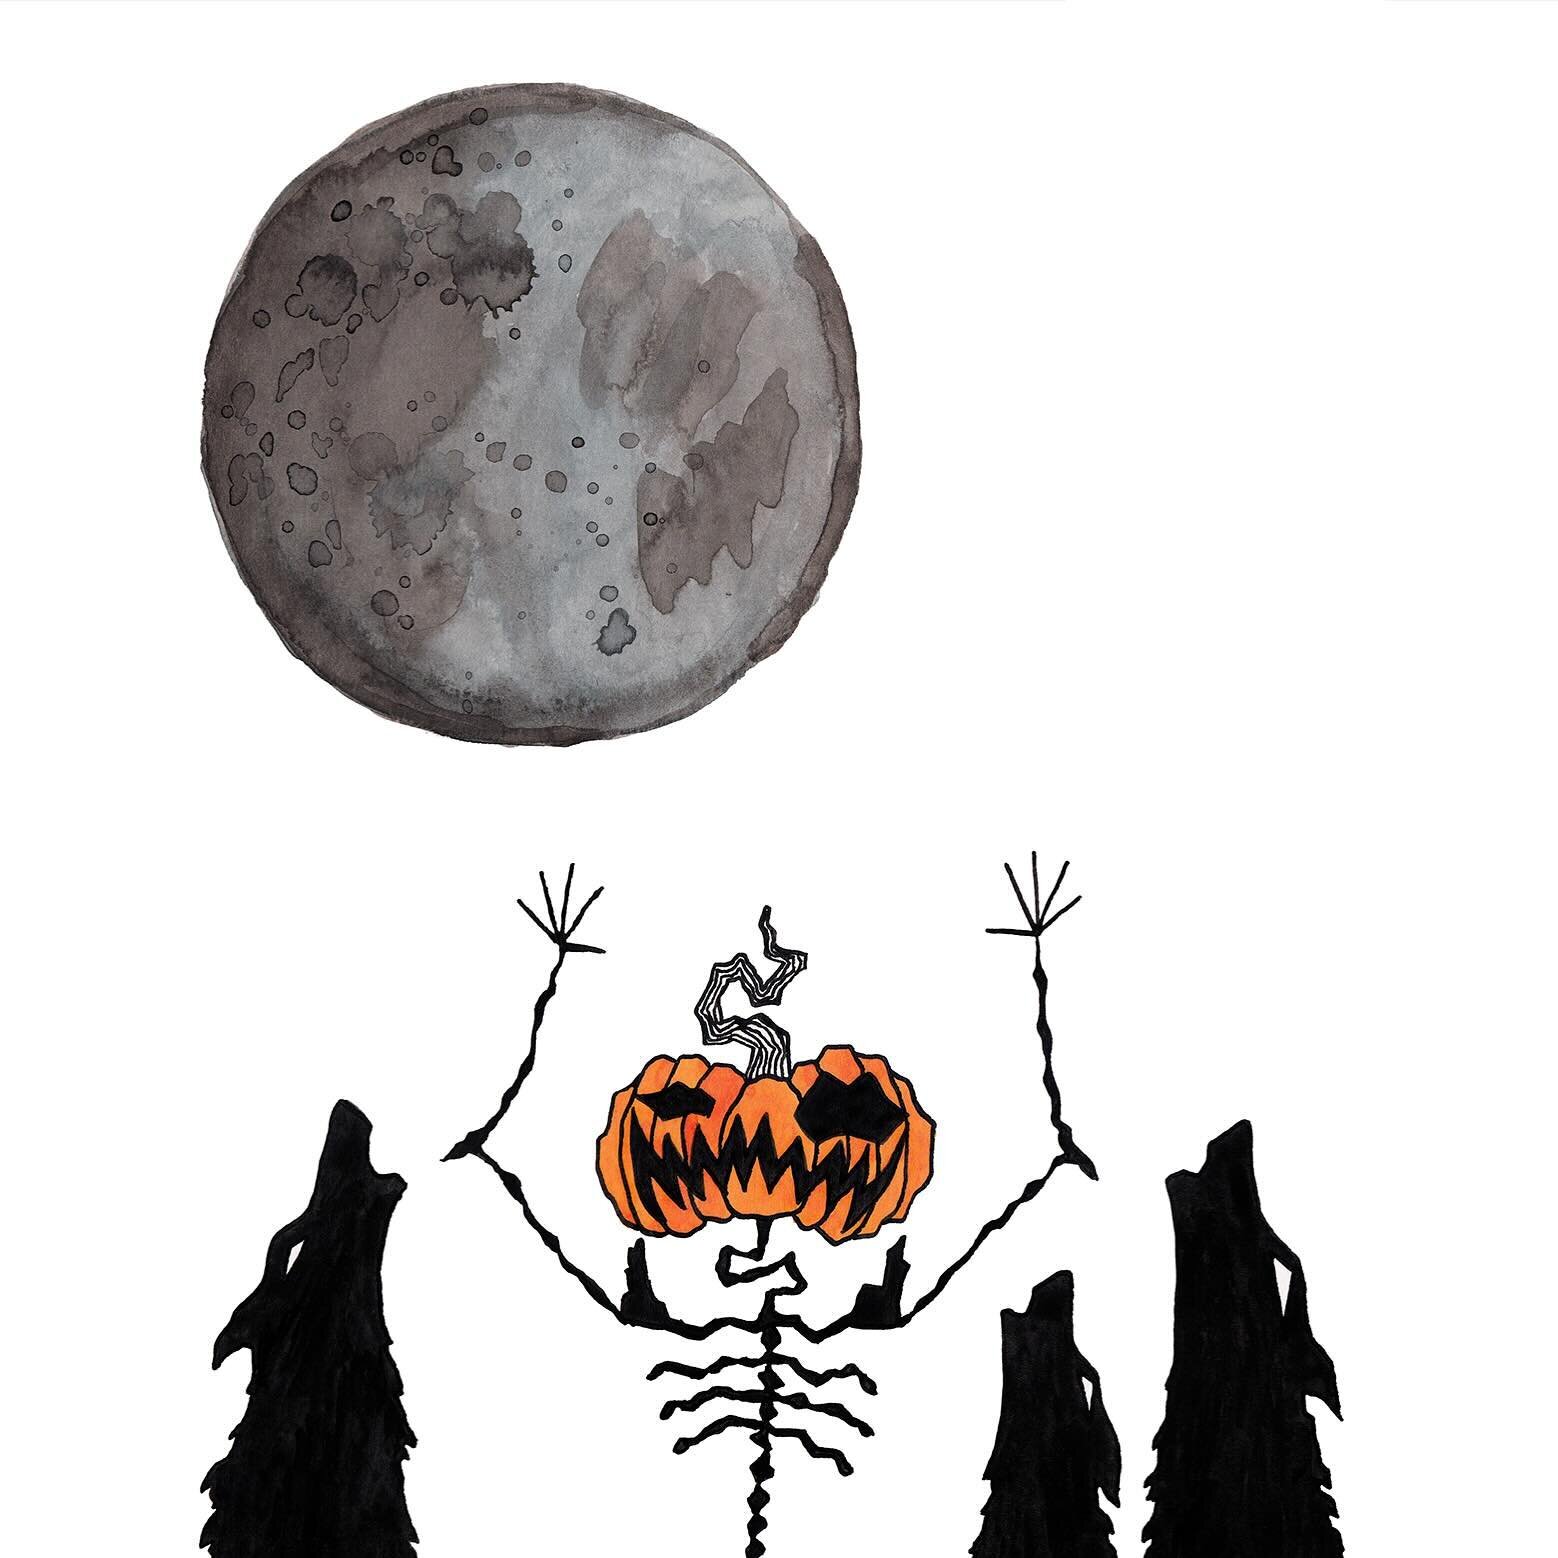 Happy Full Worm Moon! 🪱🌕🐛
Pumpkinhead hopes you howl! 🐺

Only 220 days until Halloween!

#fullmoon #howl #fullwormmoon #fullmoonart #fullmoonritual #moon #moonart #wolfpack #wolves #pumpkinhead #hallowwoods